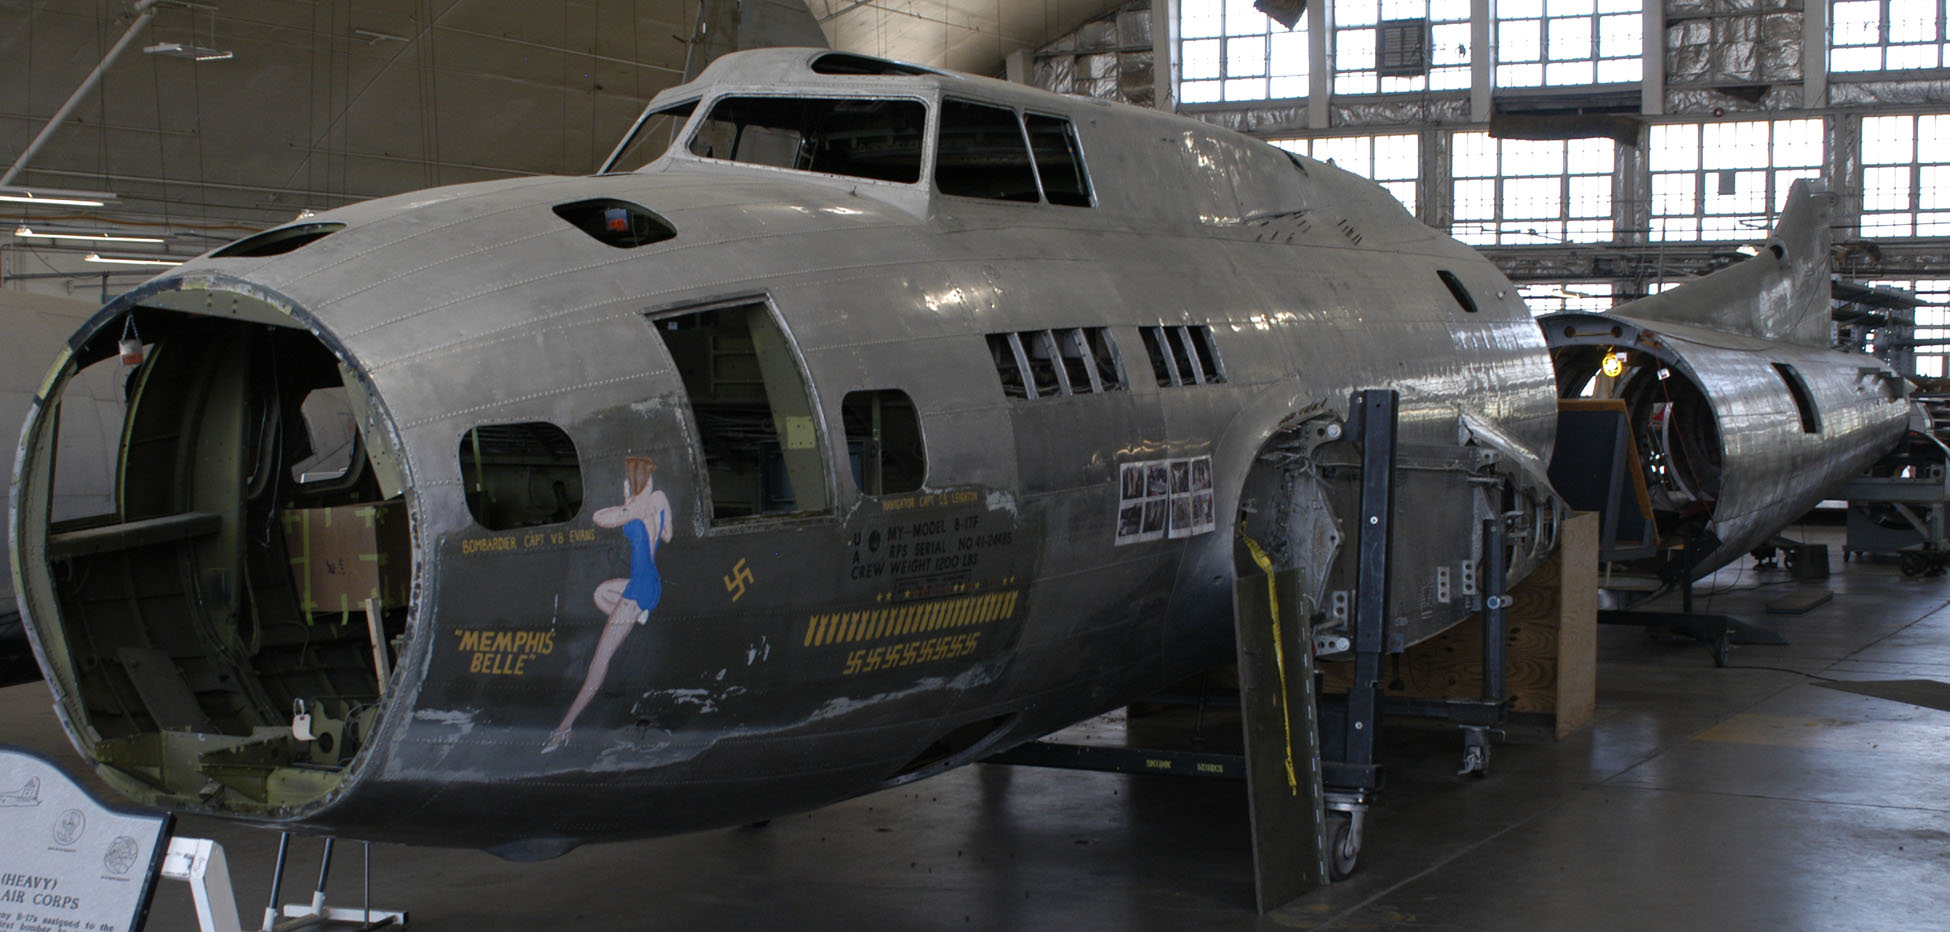 B-17F "Memphis Belle" 